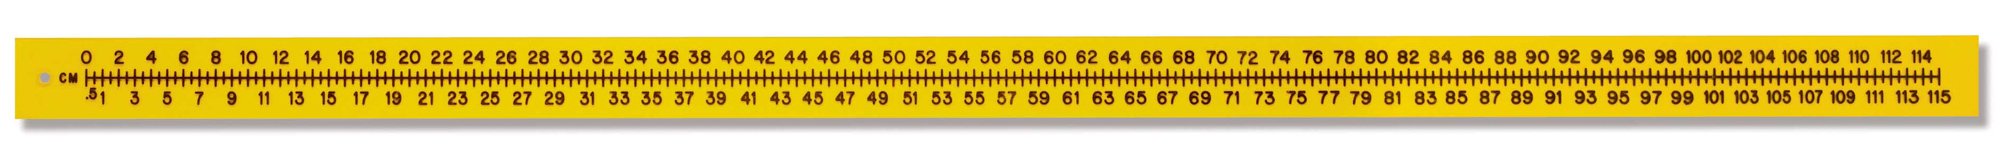 Flexible Radiopaque Extremity Ruler - 115cm L x 1/8